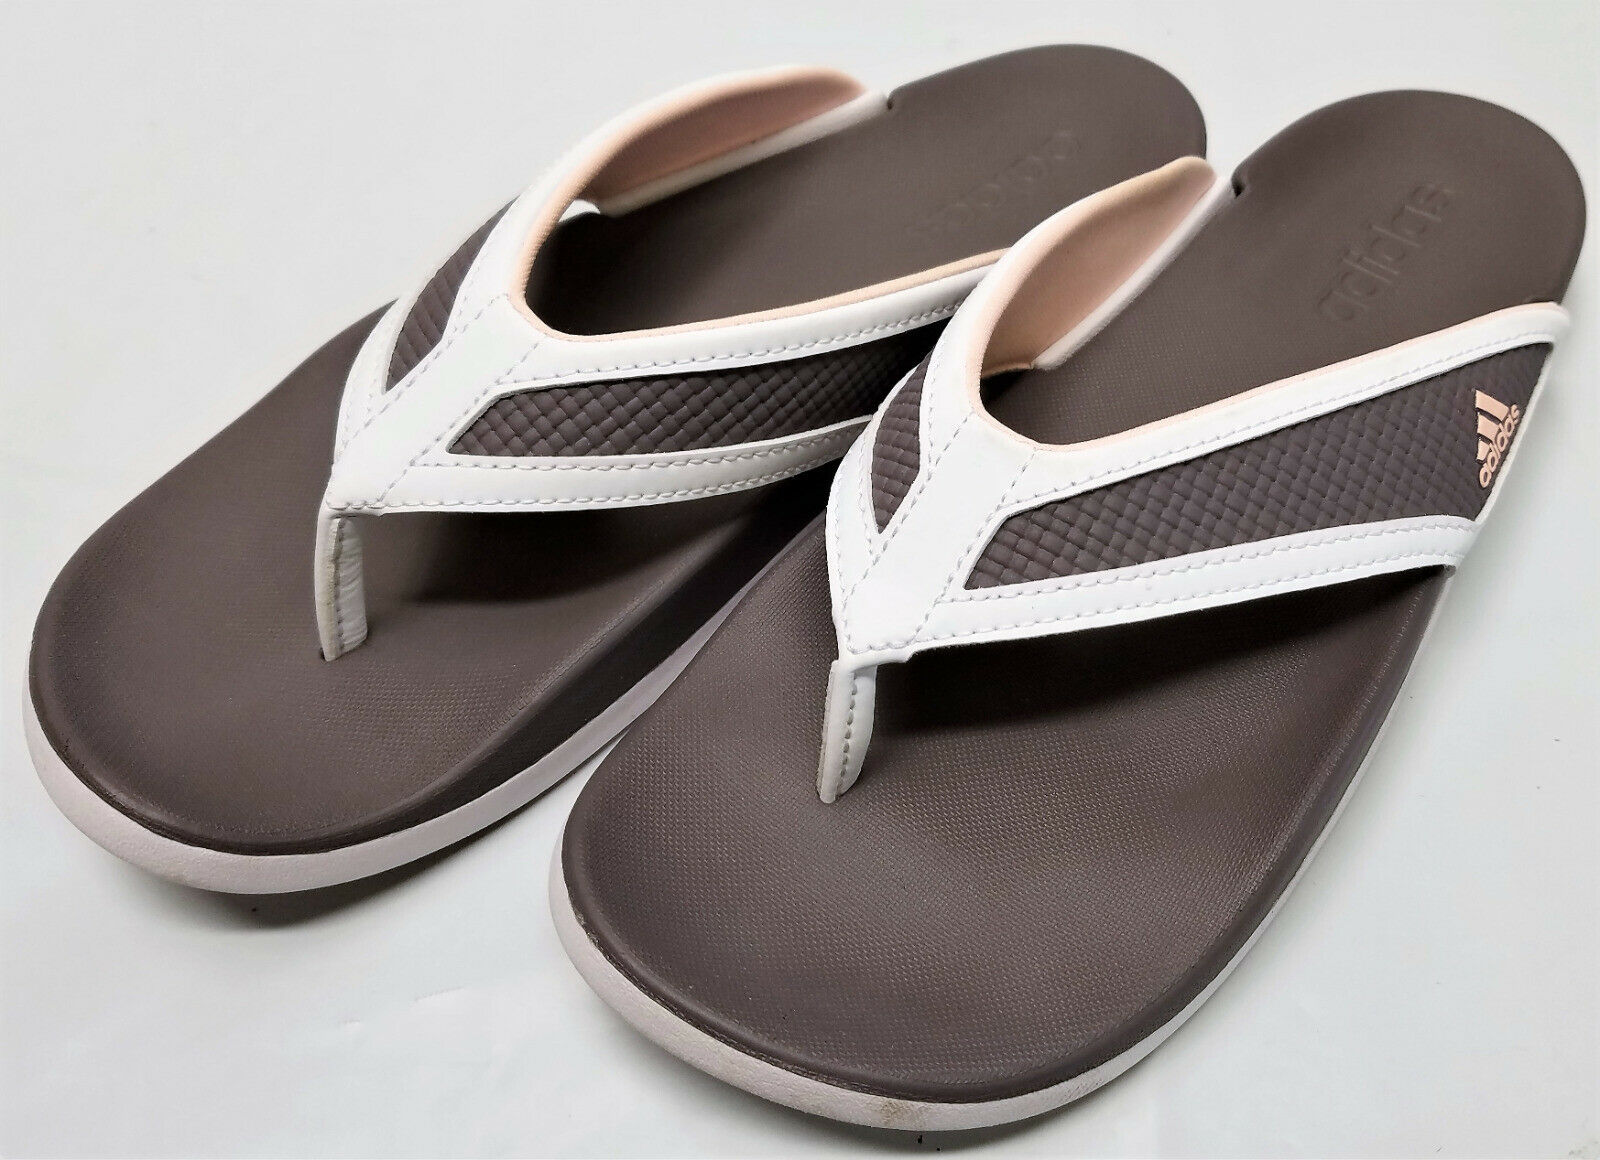 Adidas Adilette Women's CF+ Summer Flip-Flop Sandals - Size 8 - Grey/Pink - Sandals & Flip Flops